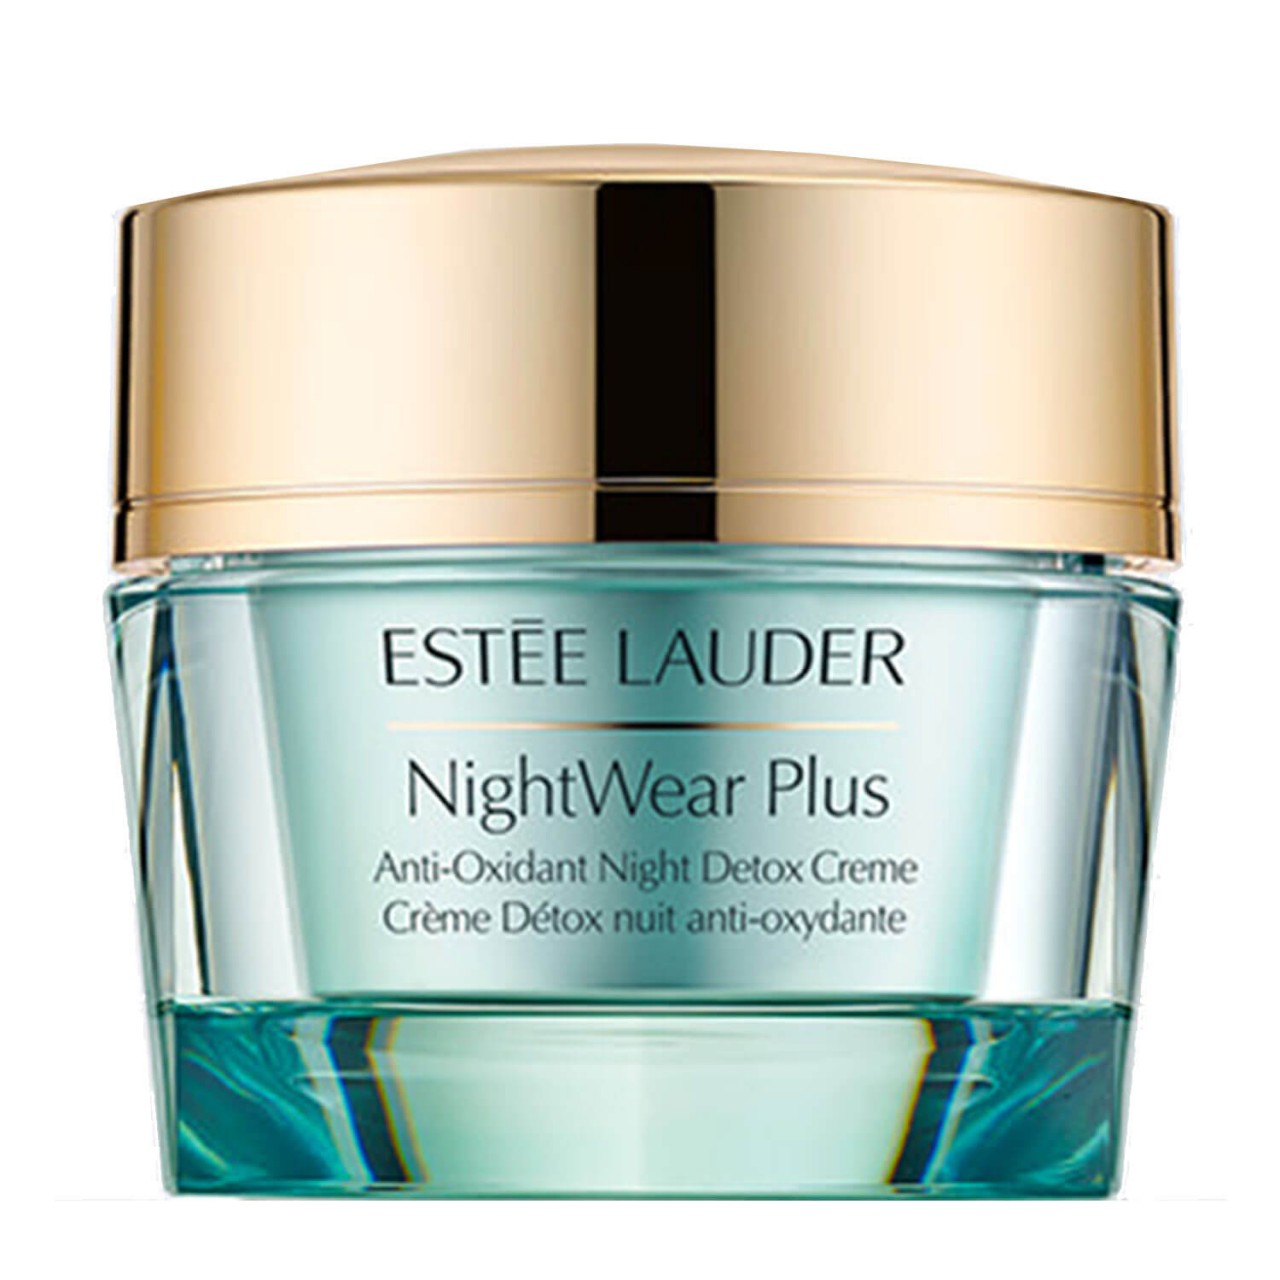 Estee Lauder - NightWear Plus